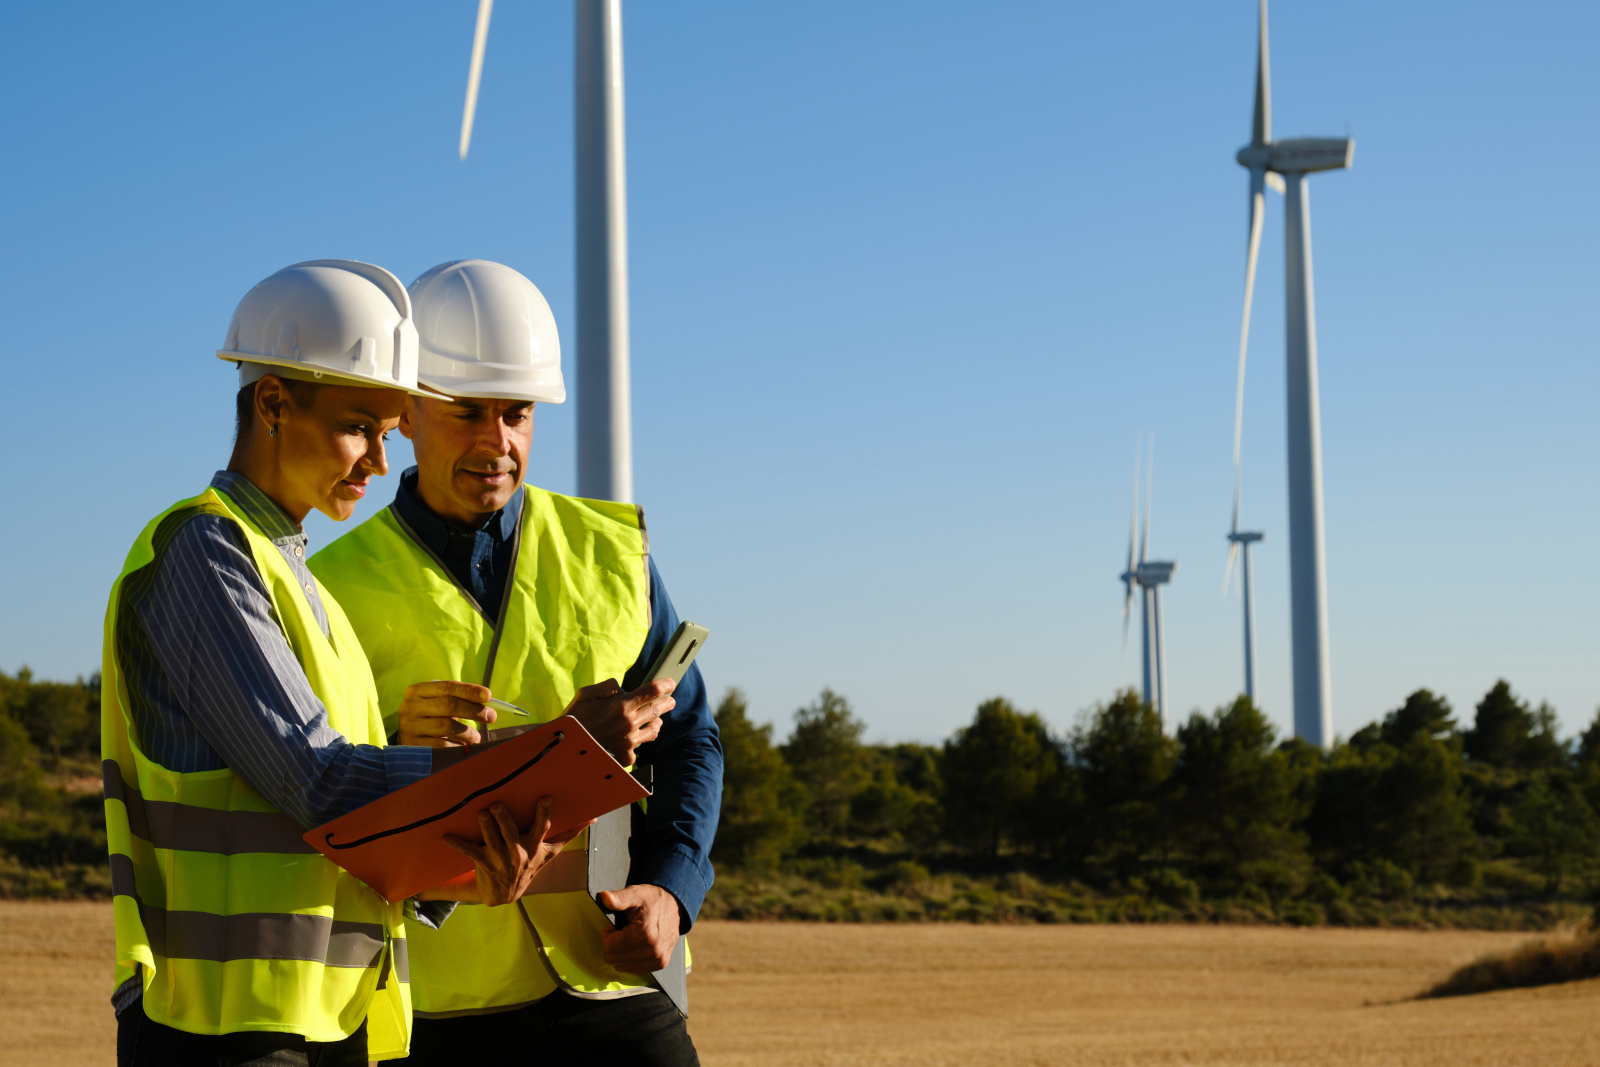 Using NestForms offline surveys within wind turbine construction location